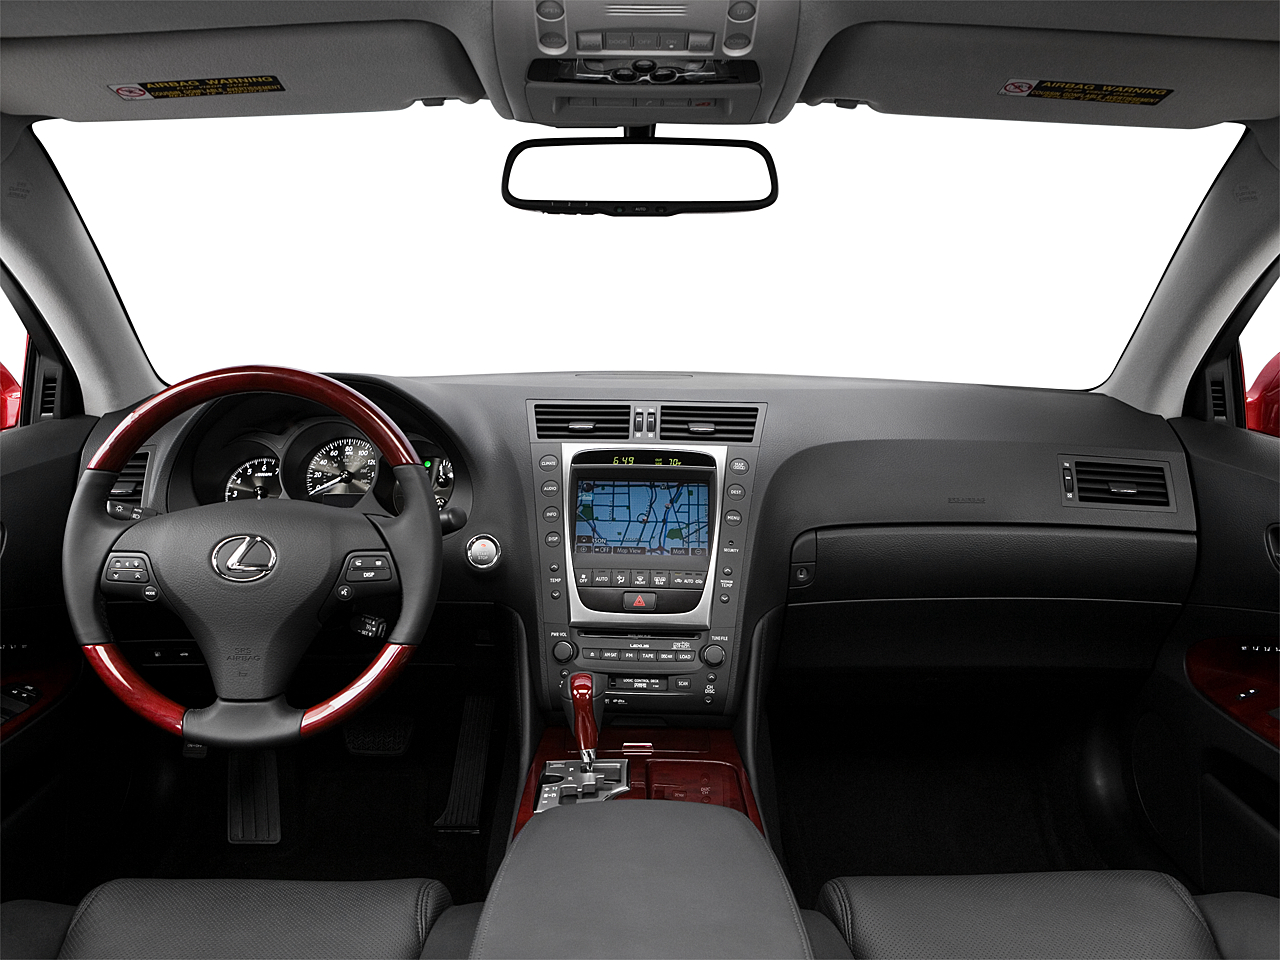 2008 Lexus GS 460 4dr Sedan - Research - GrooveCar